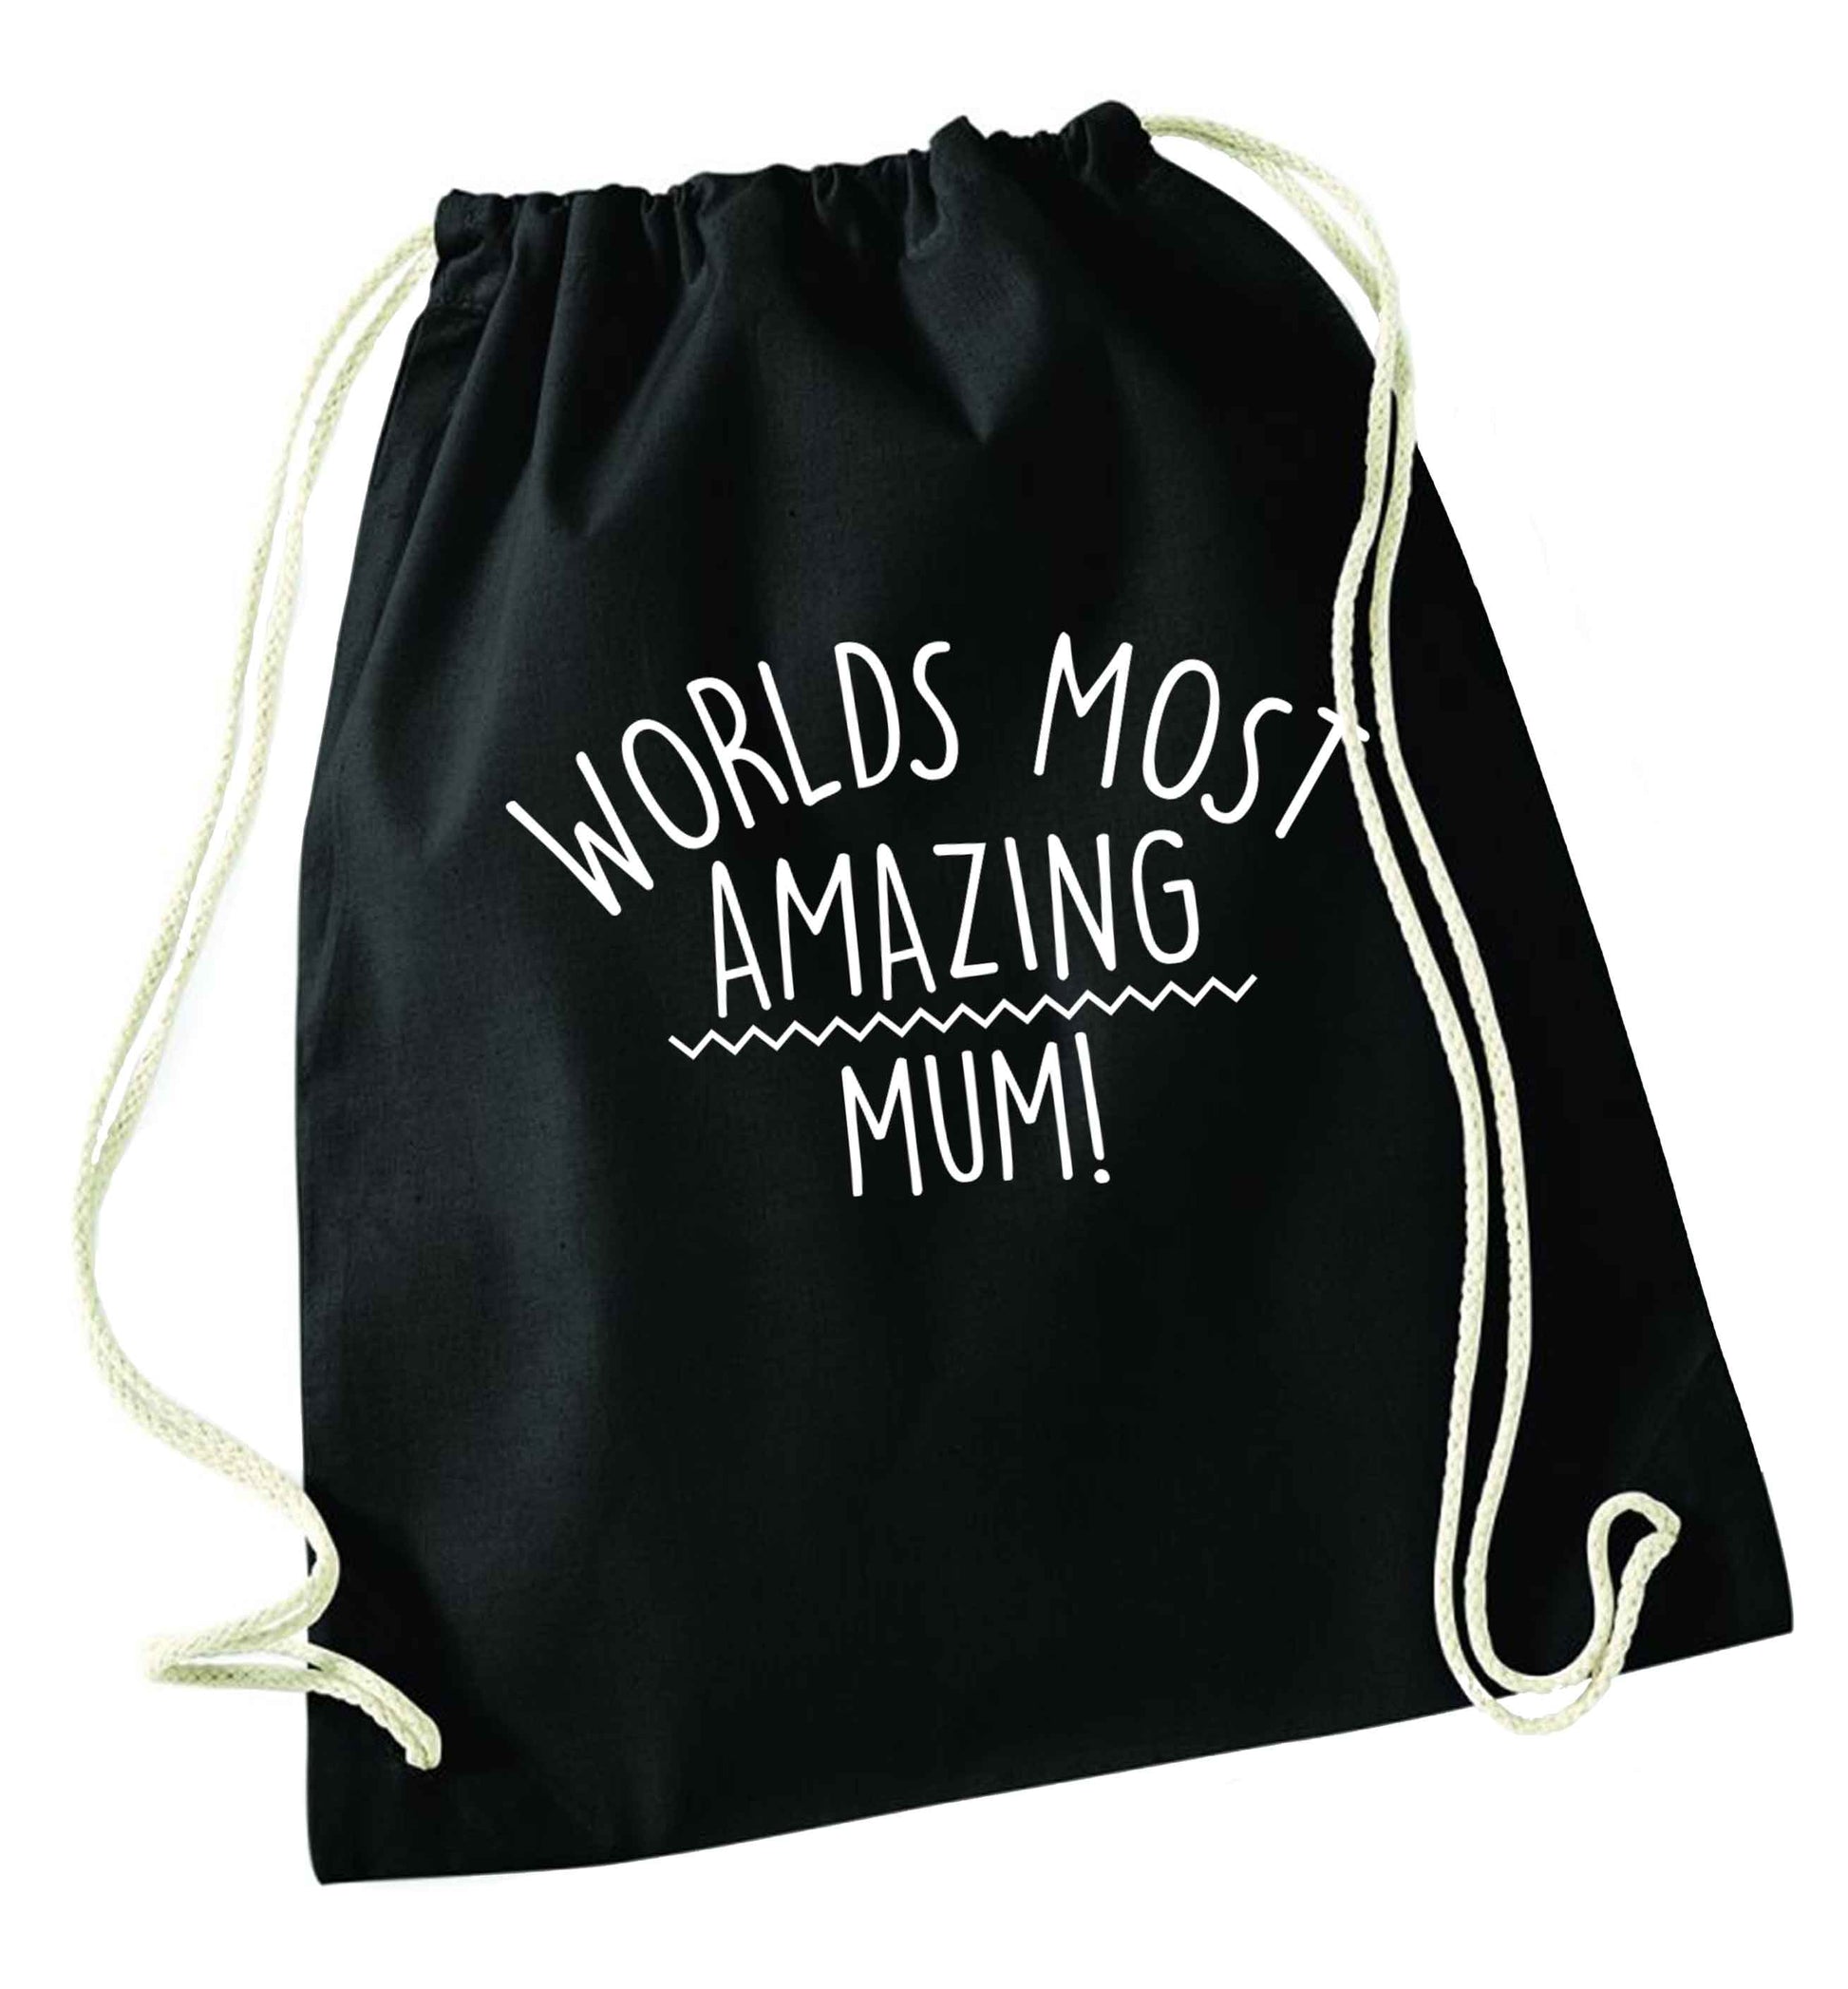 Worlds most amazing mum black drawstring bag